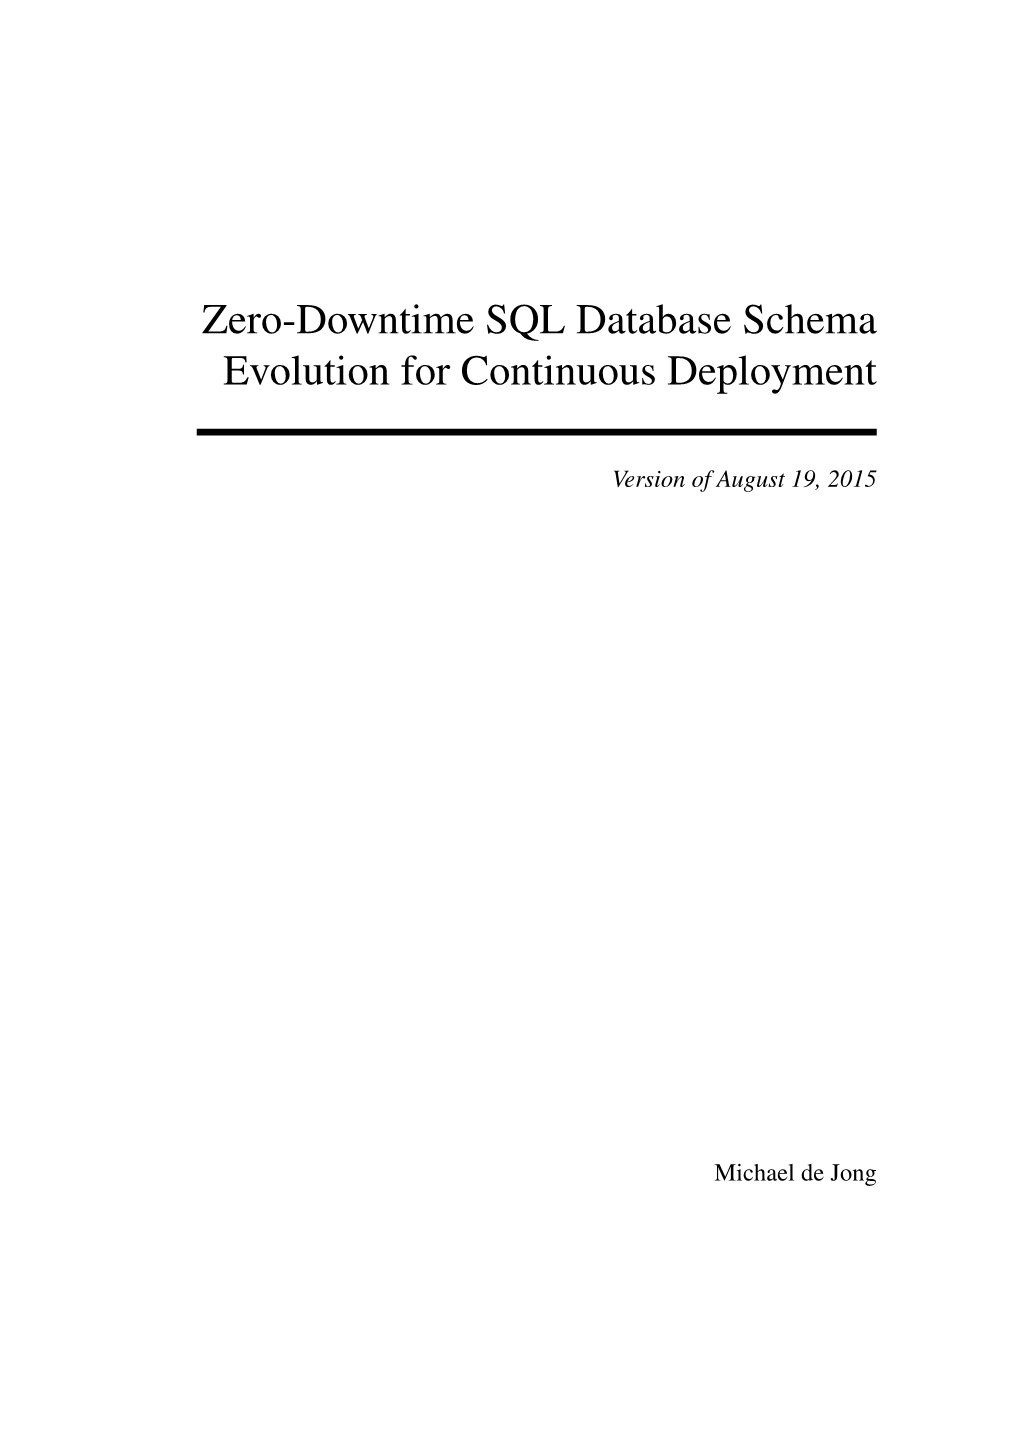 Zero-Downtime SQL Database Schema Evolution for Continuous Deployment